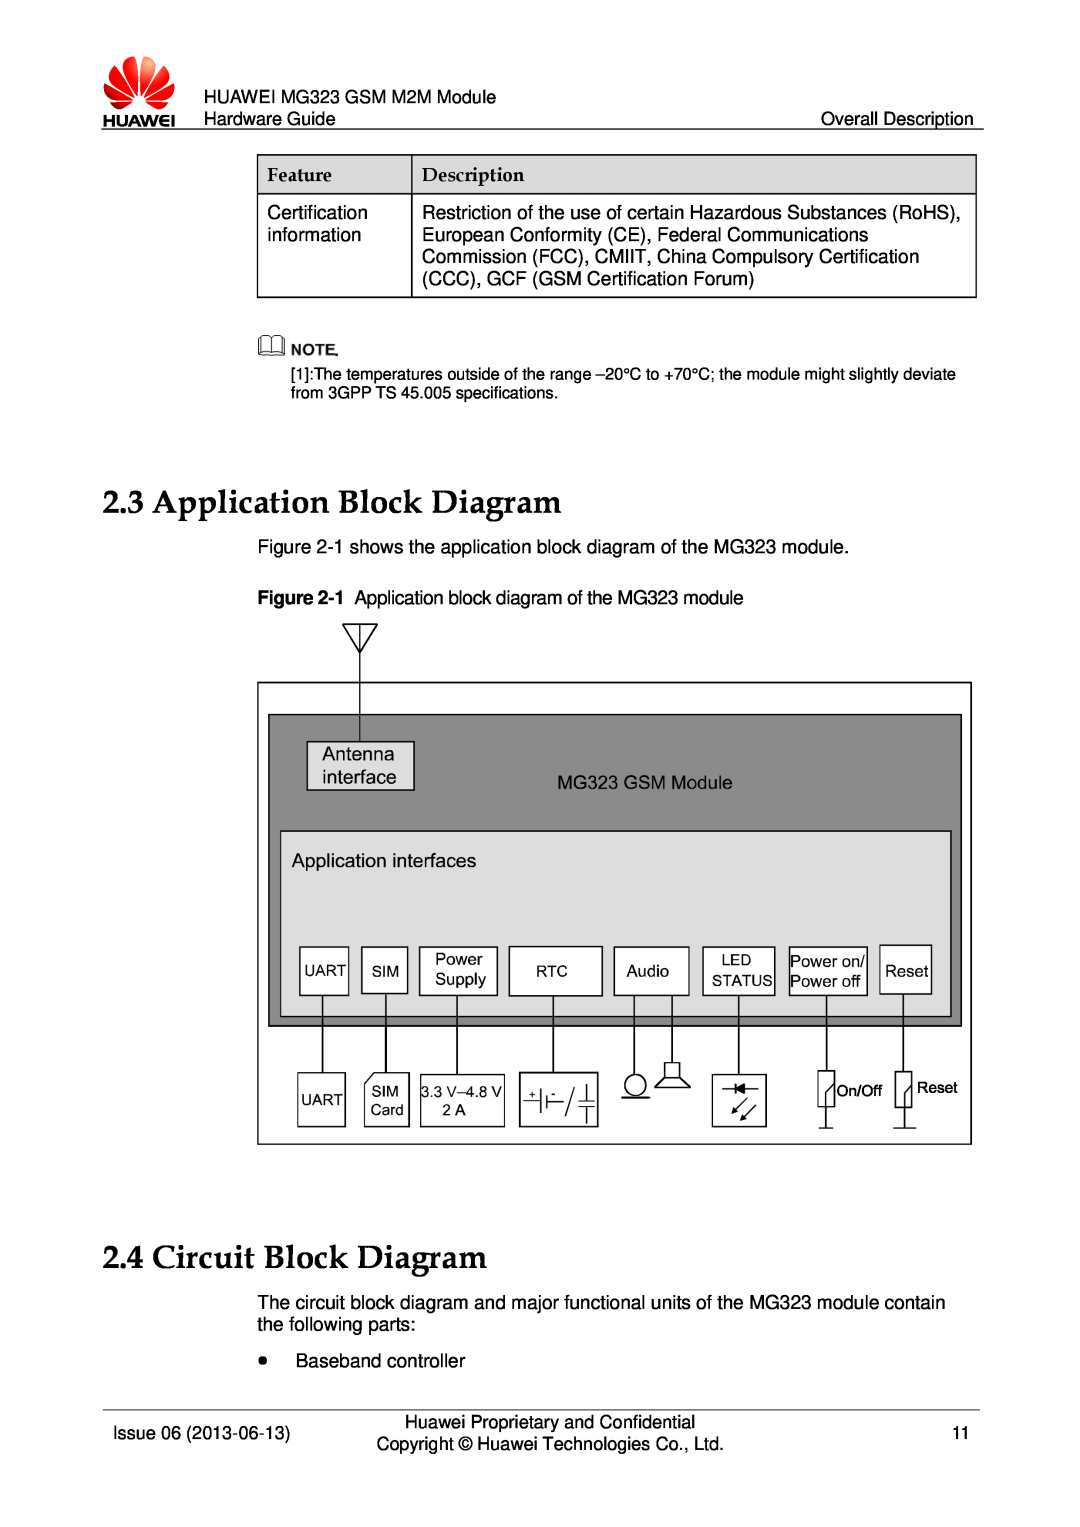 Huawei MG323 manual Application Block Diagram, Circuit Block Diagram, Feature, Description 